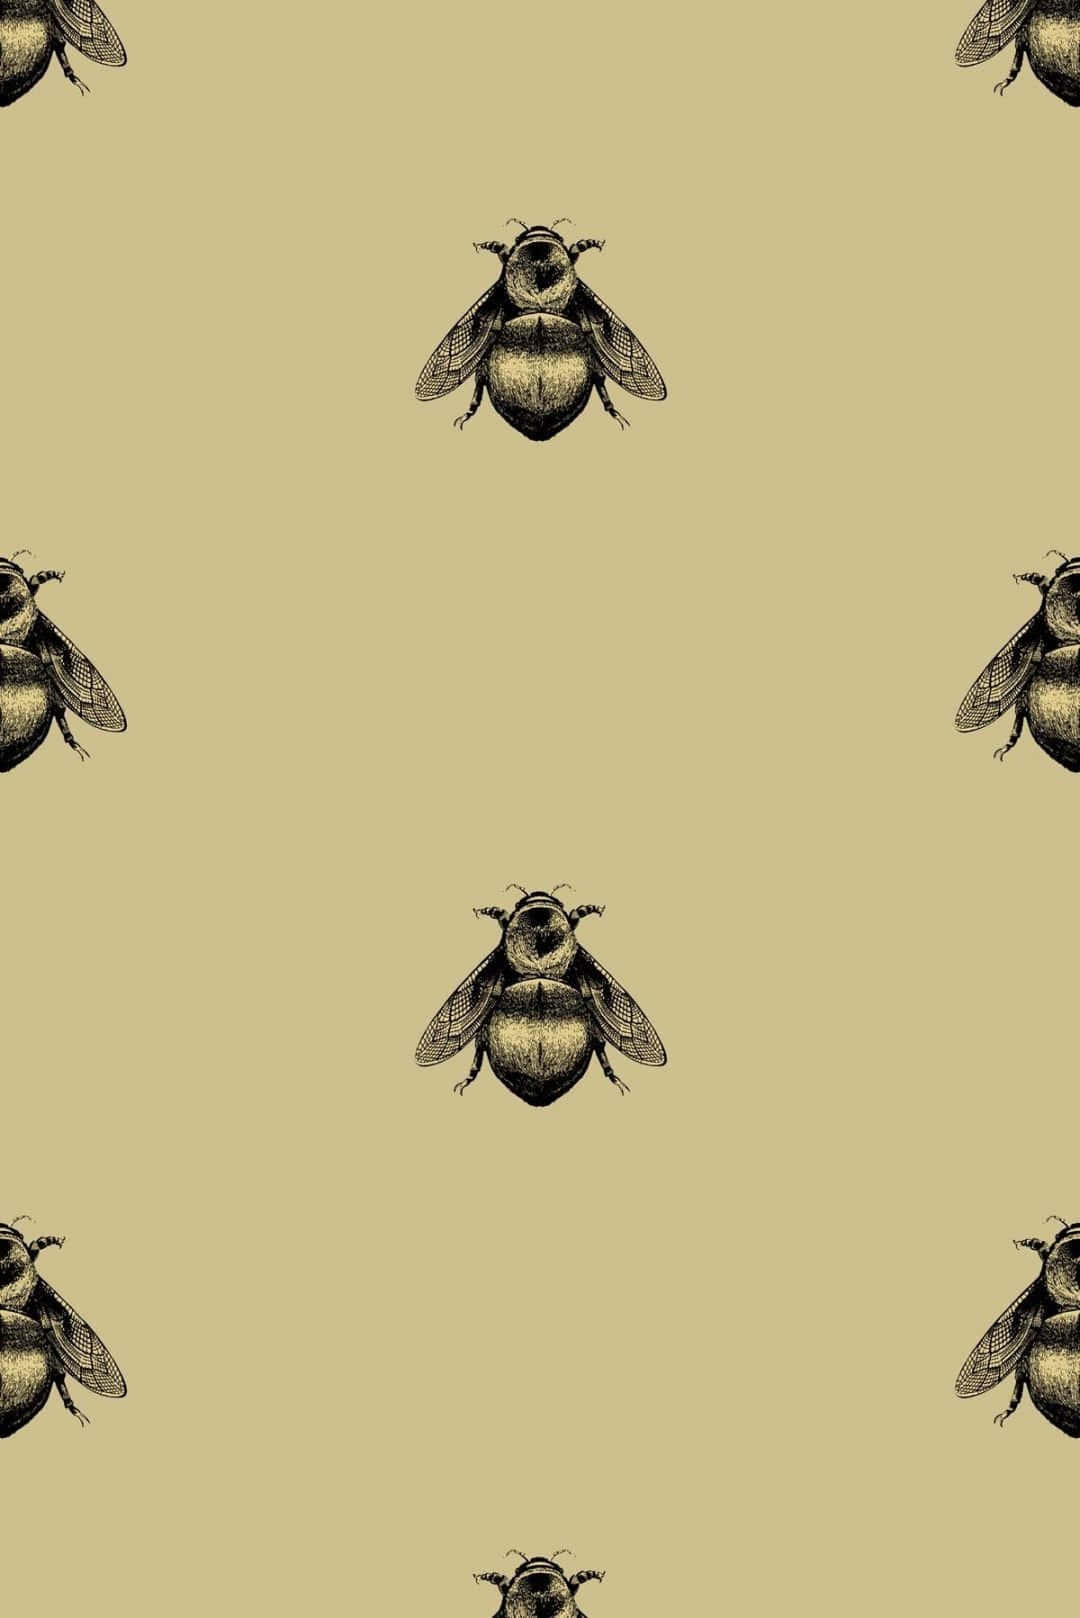 Vibrant Bee on Flower iPhone Wallpaper Wallpaper